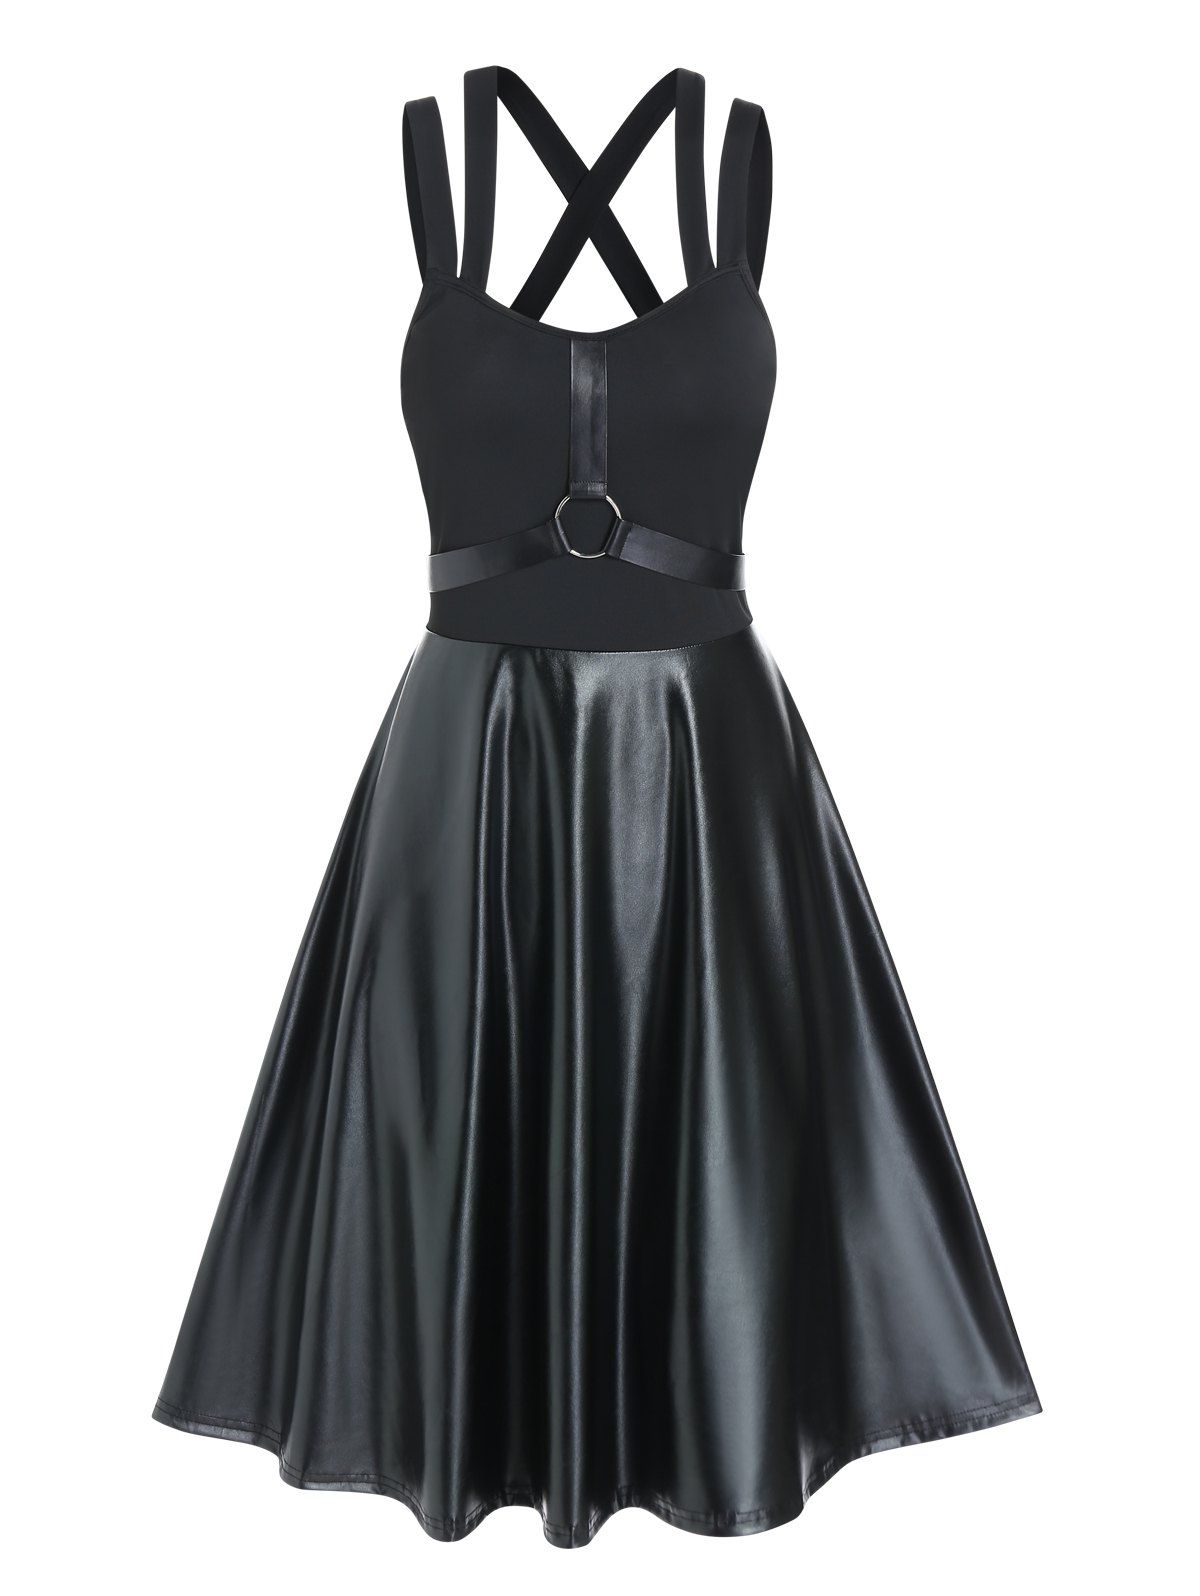 Gothic Dress Faux Leather A Line Dress Cross Back Dual Straps Combo Dress - BLACK M